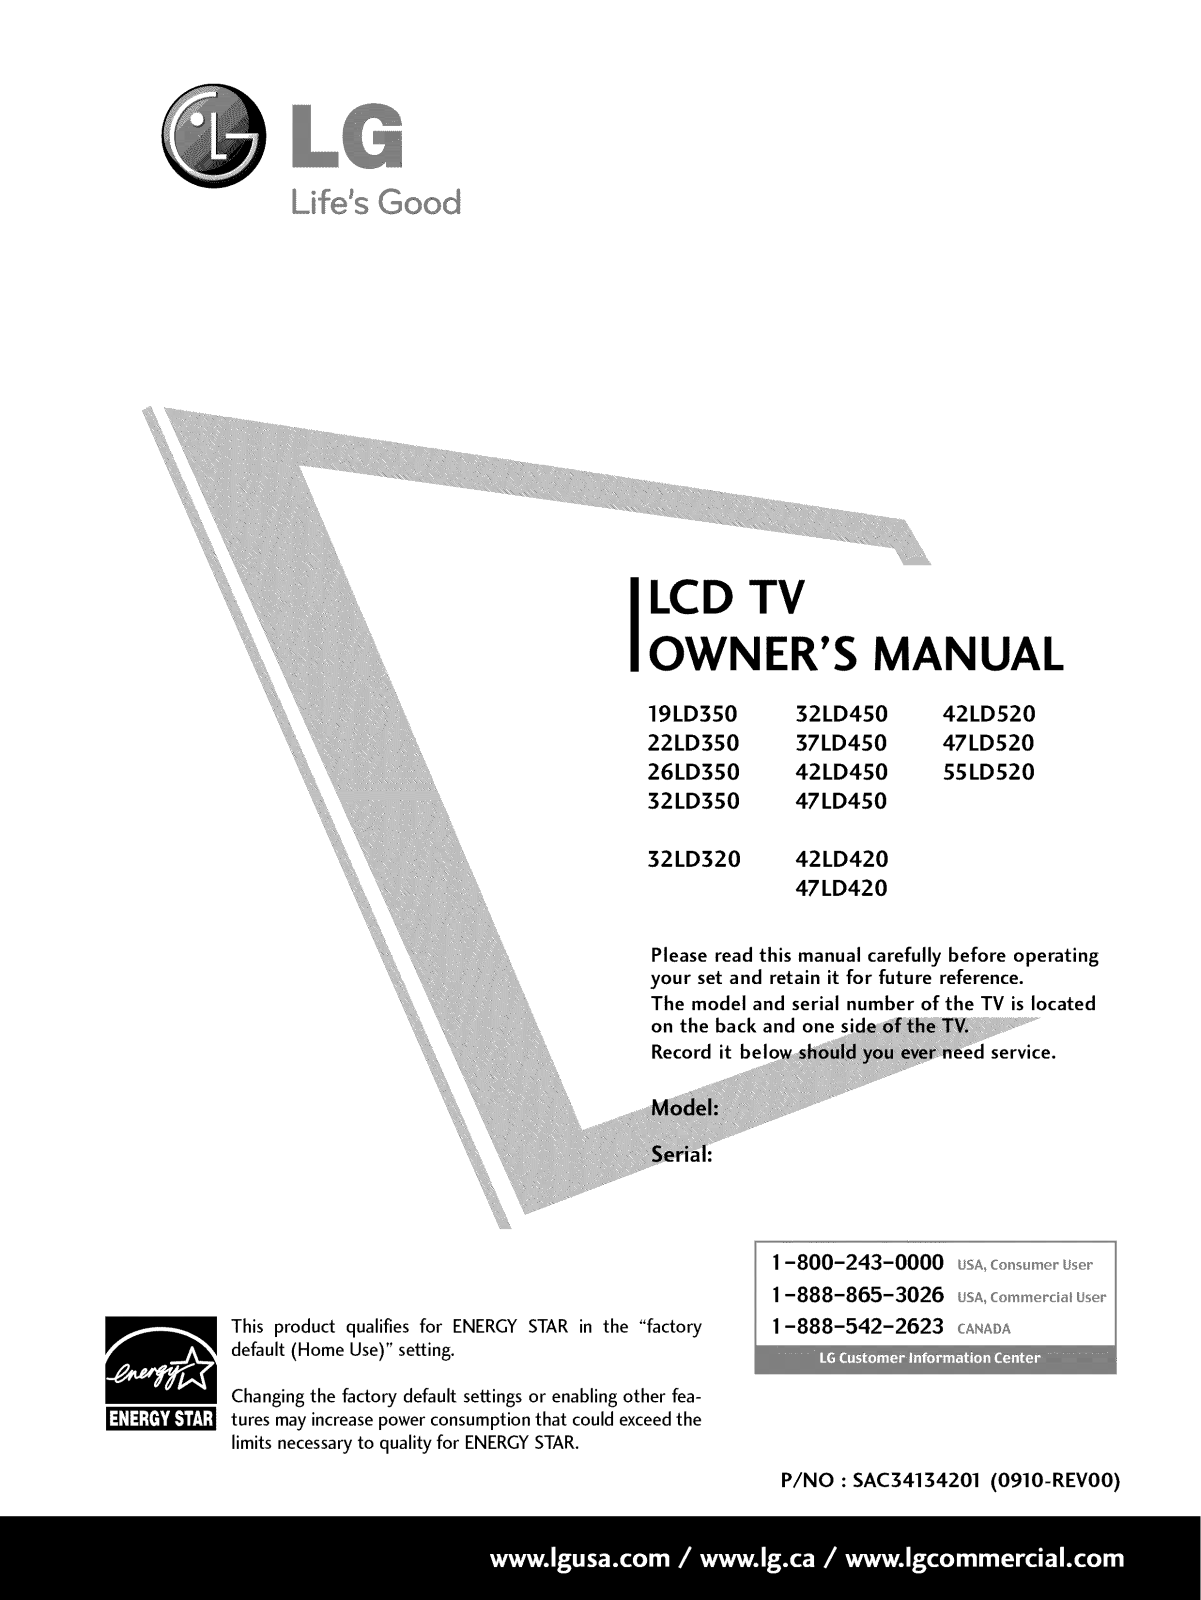 LG 55LD520, 47LD520, 47LD450, 42LD520, 42LD450 Owner’s Manual